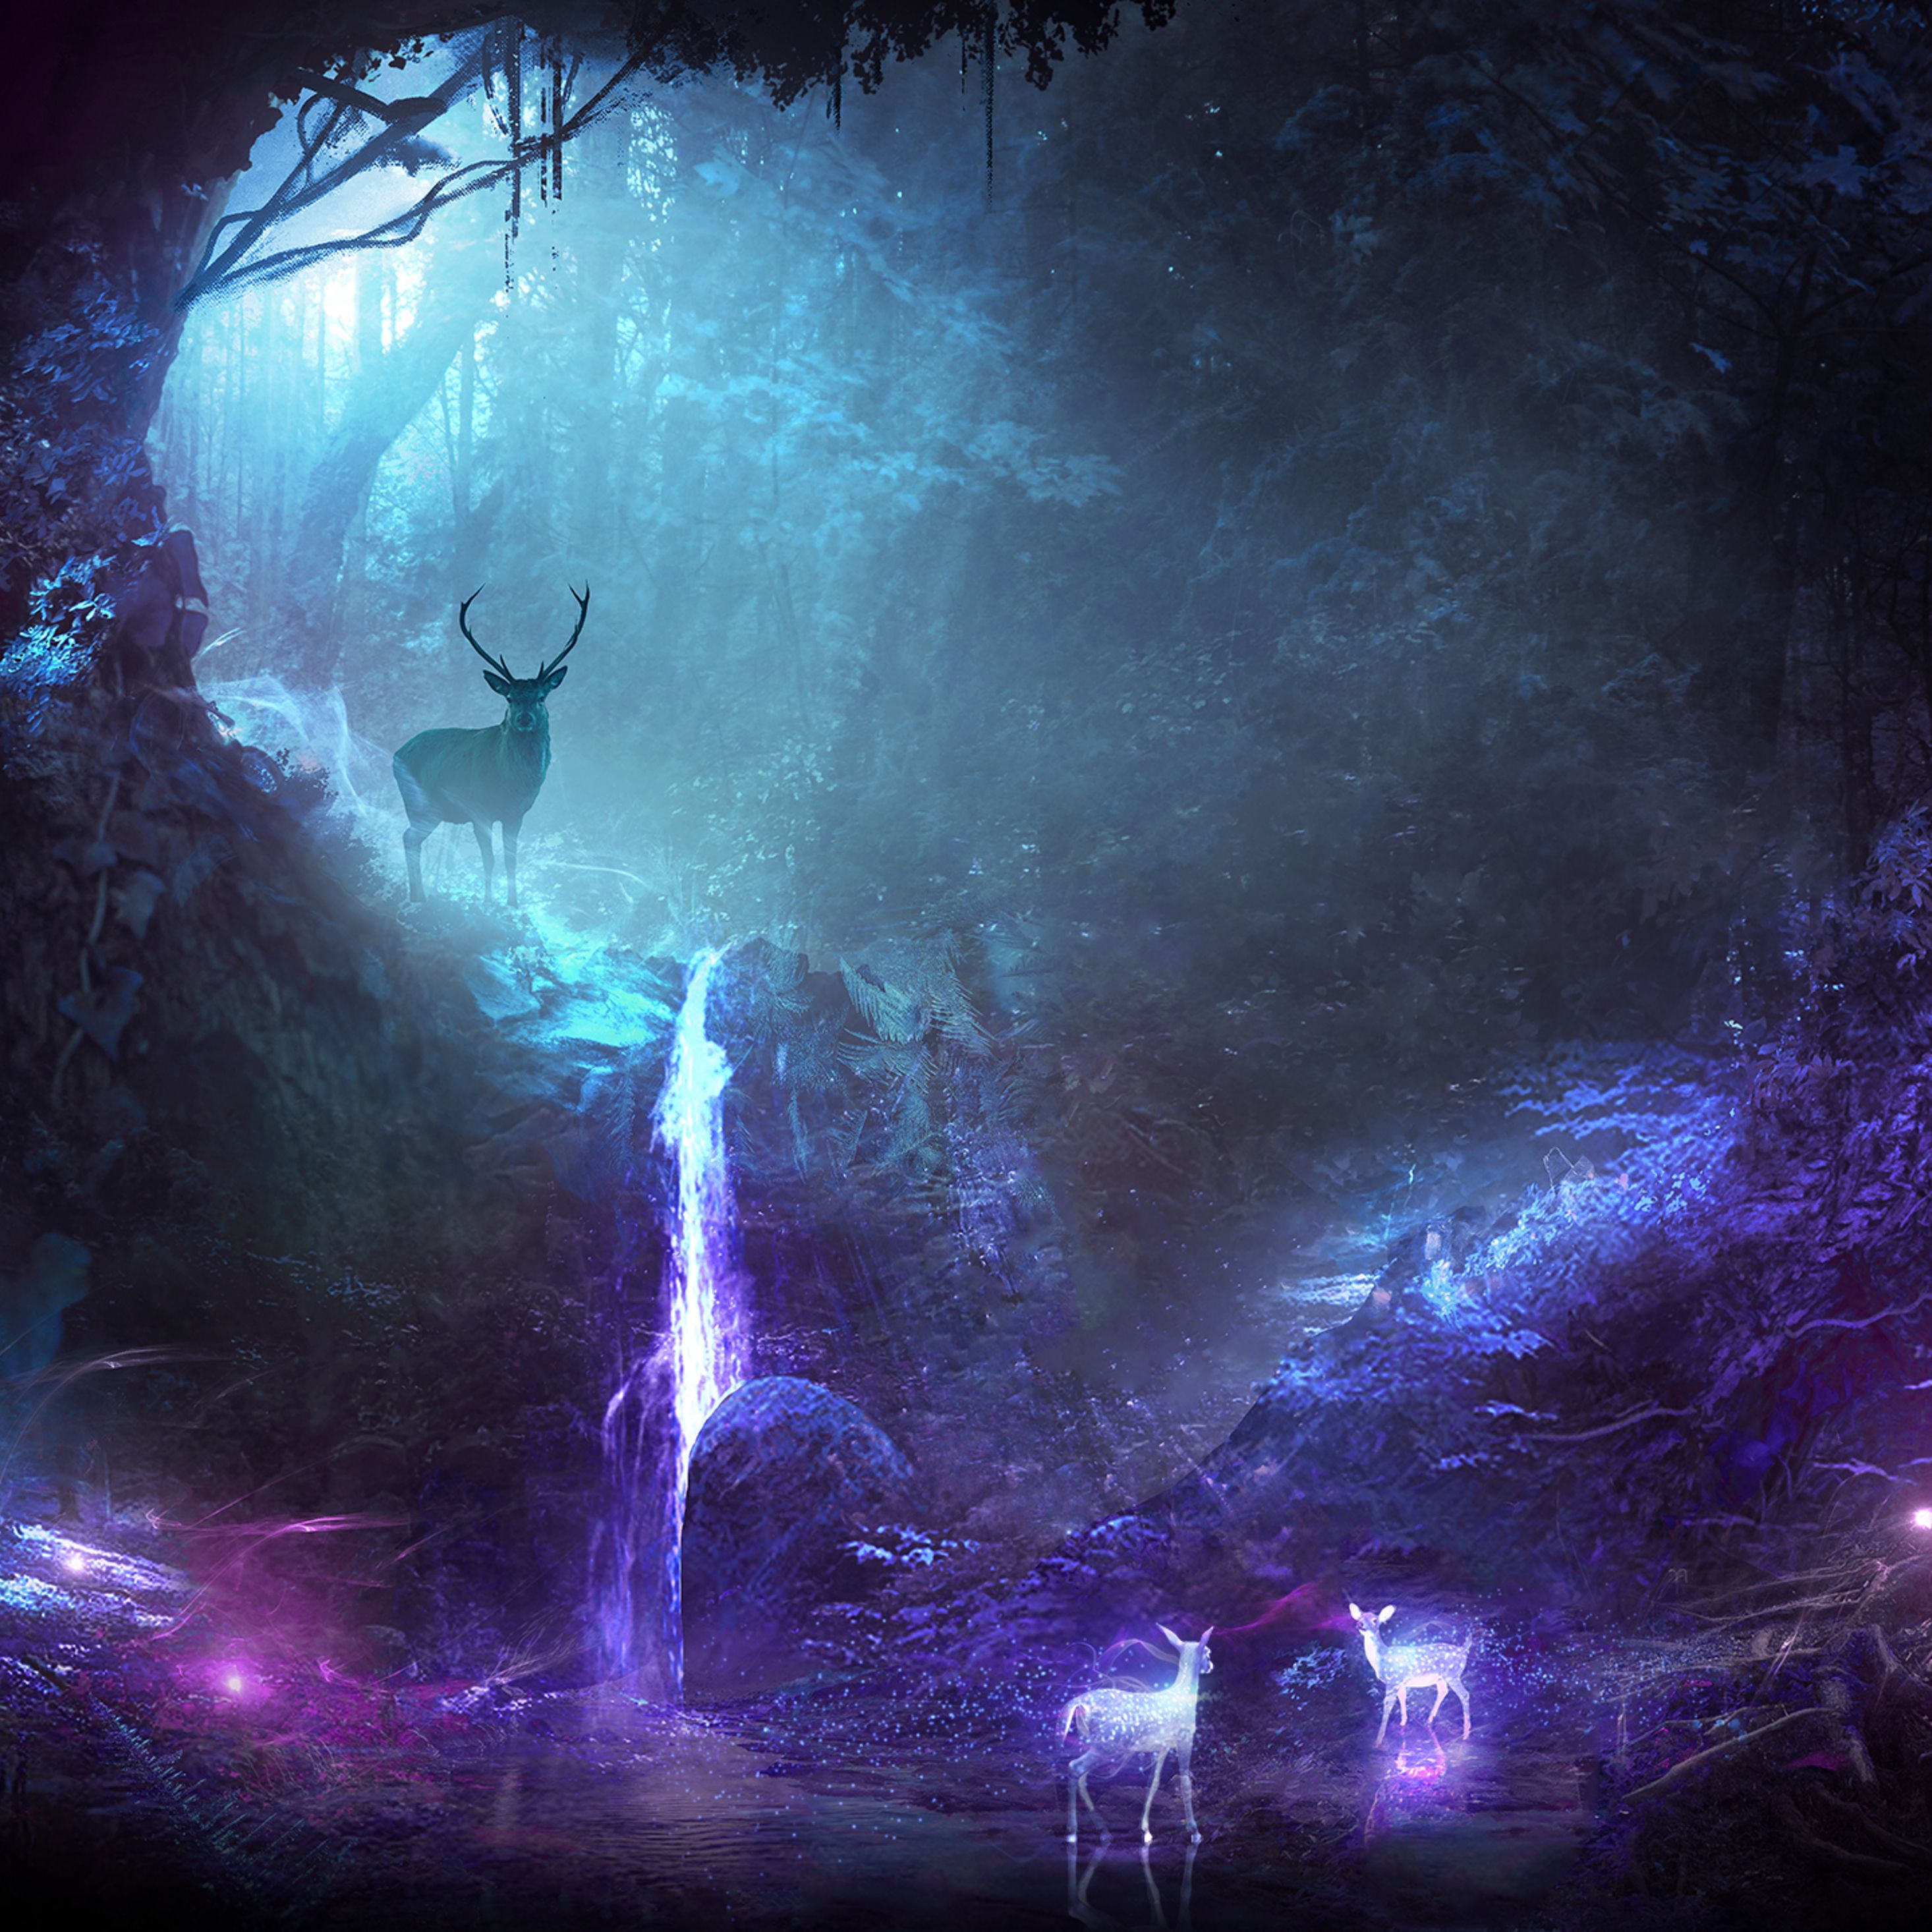 Deer Animal Night Fantasy Waterfall iPad Pro Retina Display HD 4k Wallpaper, Image, Background, Photo and Picture